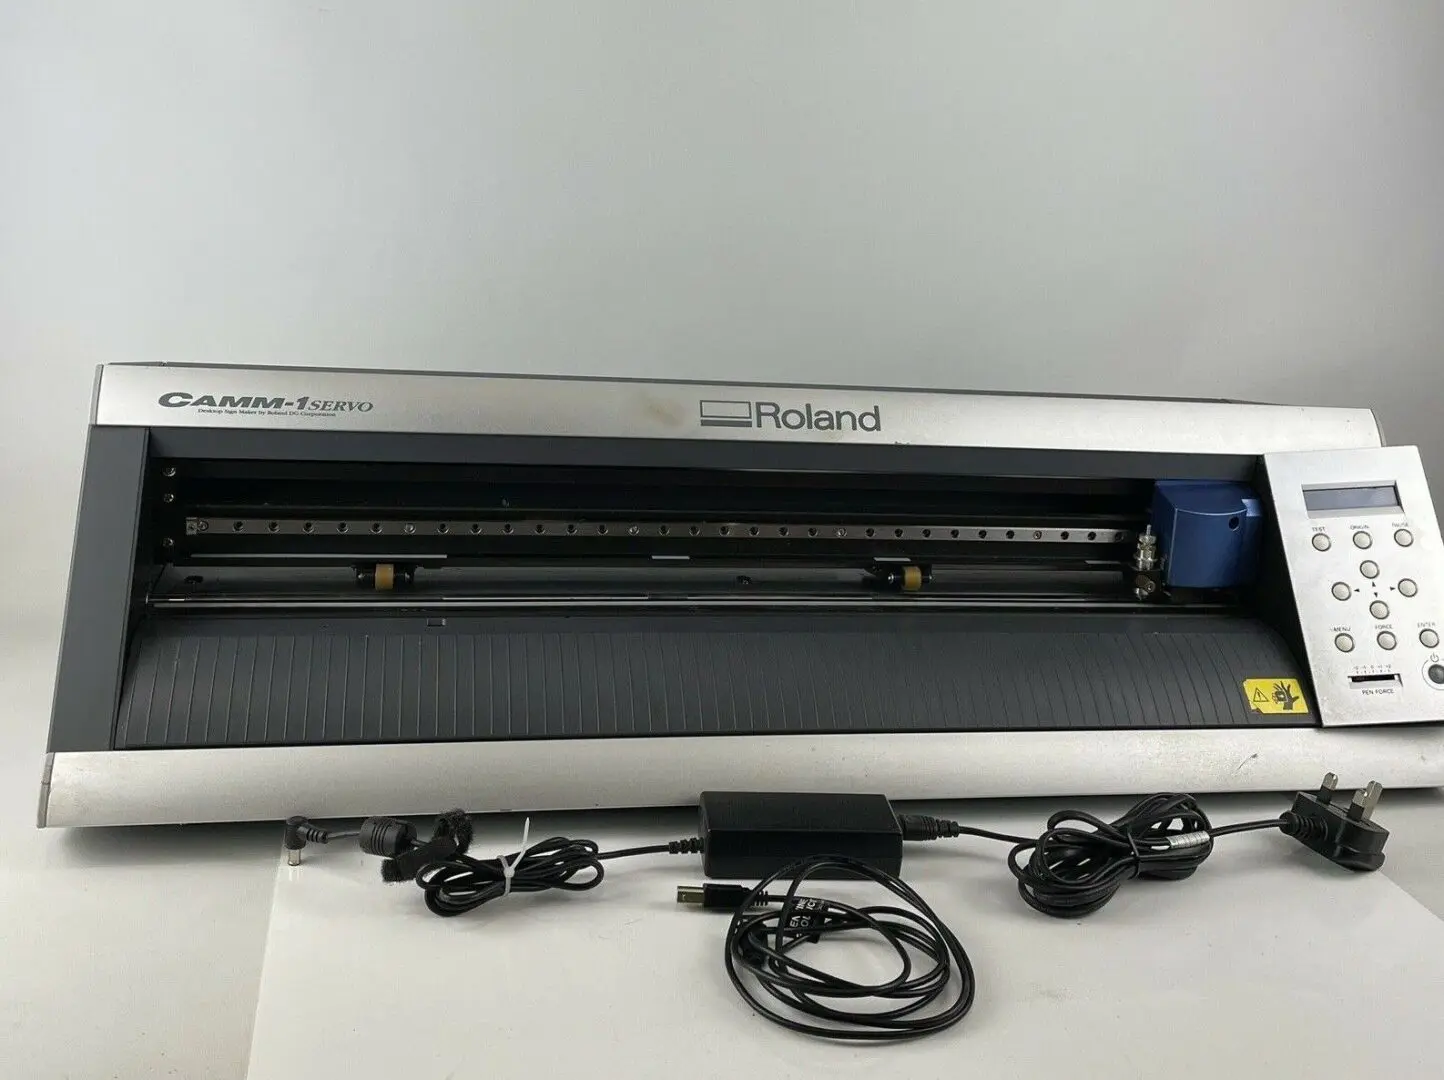 Roland CAMM-1 Servo GX-24 CNC Vinyl Plotter Cutter with Software